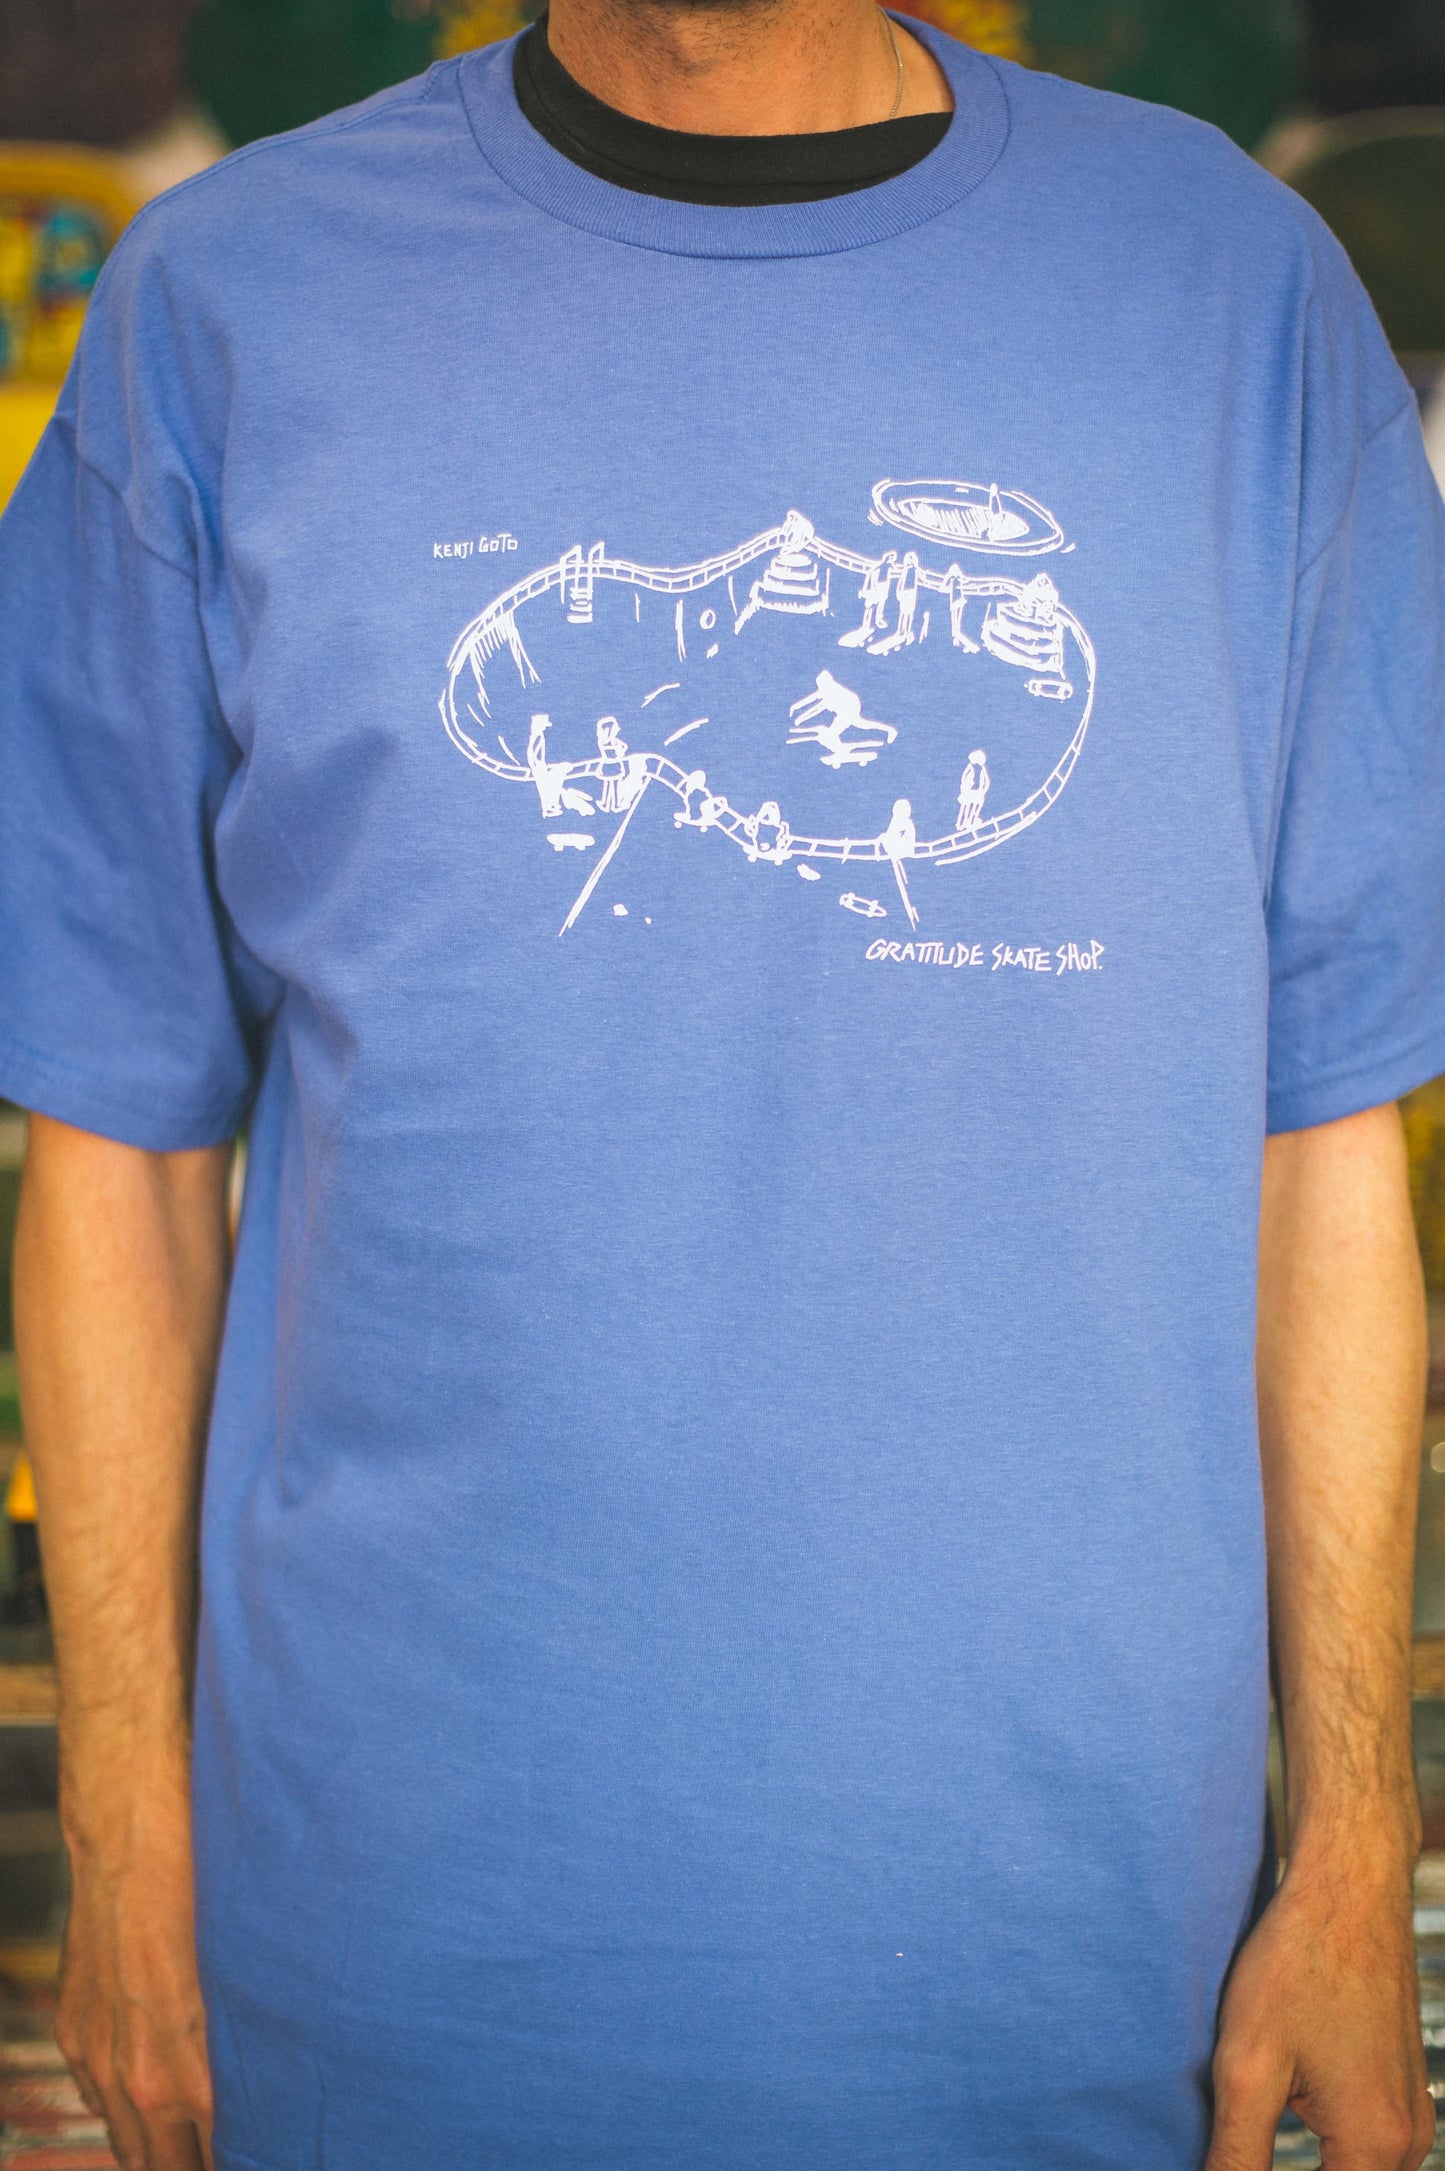 Gratitude Skateshop Kenji Goto 'Pool Skaters' Blue T-Shirt